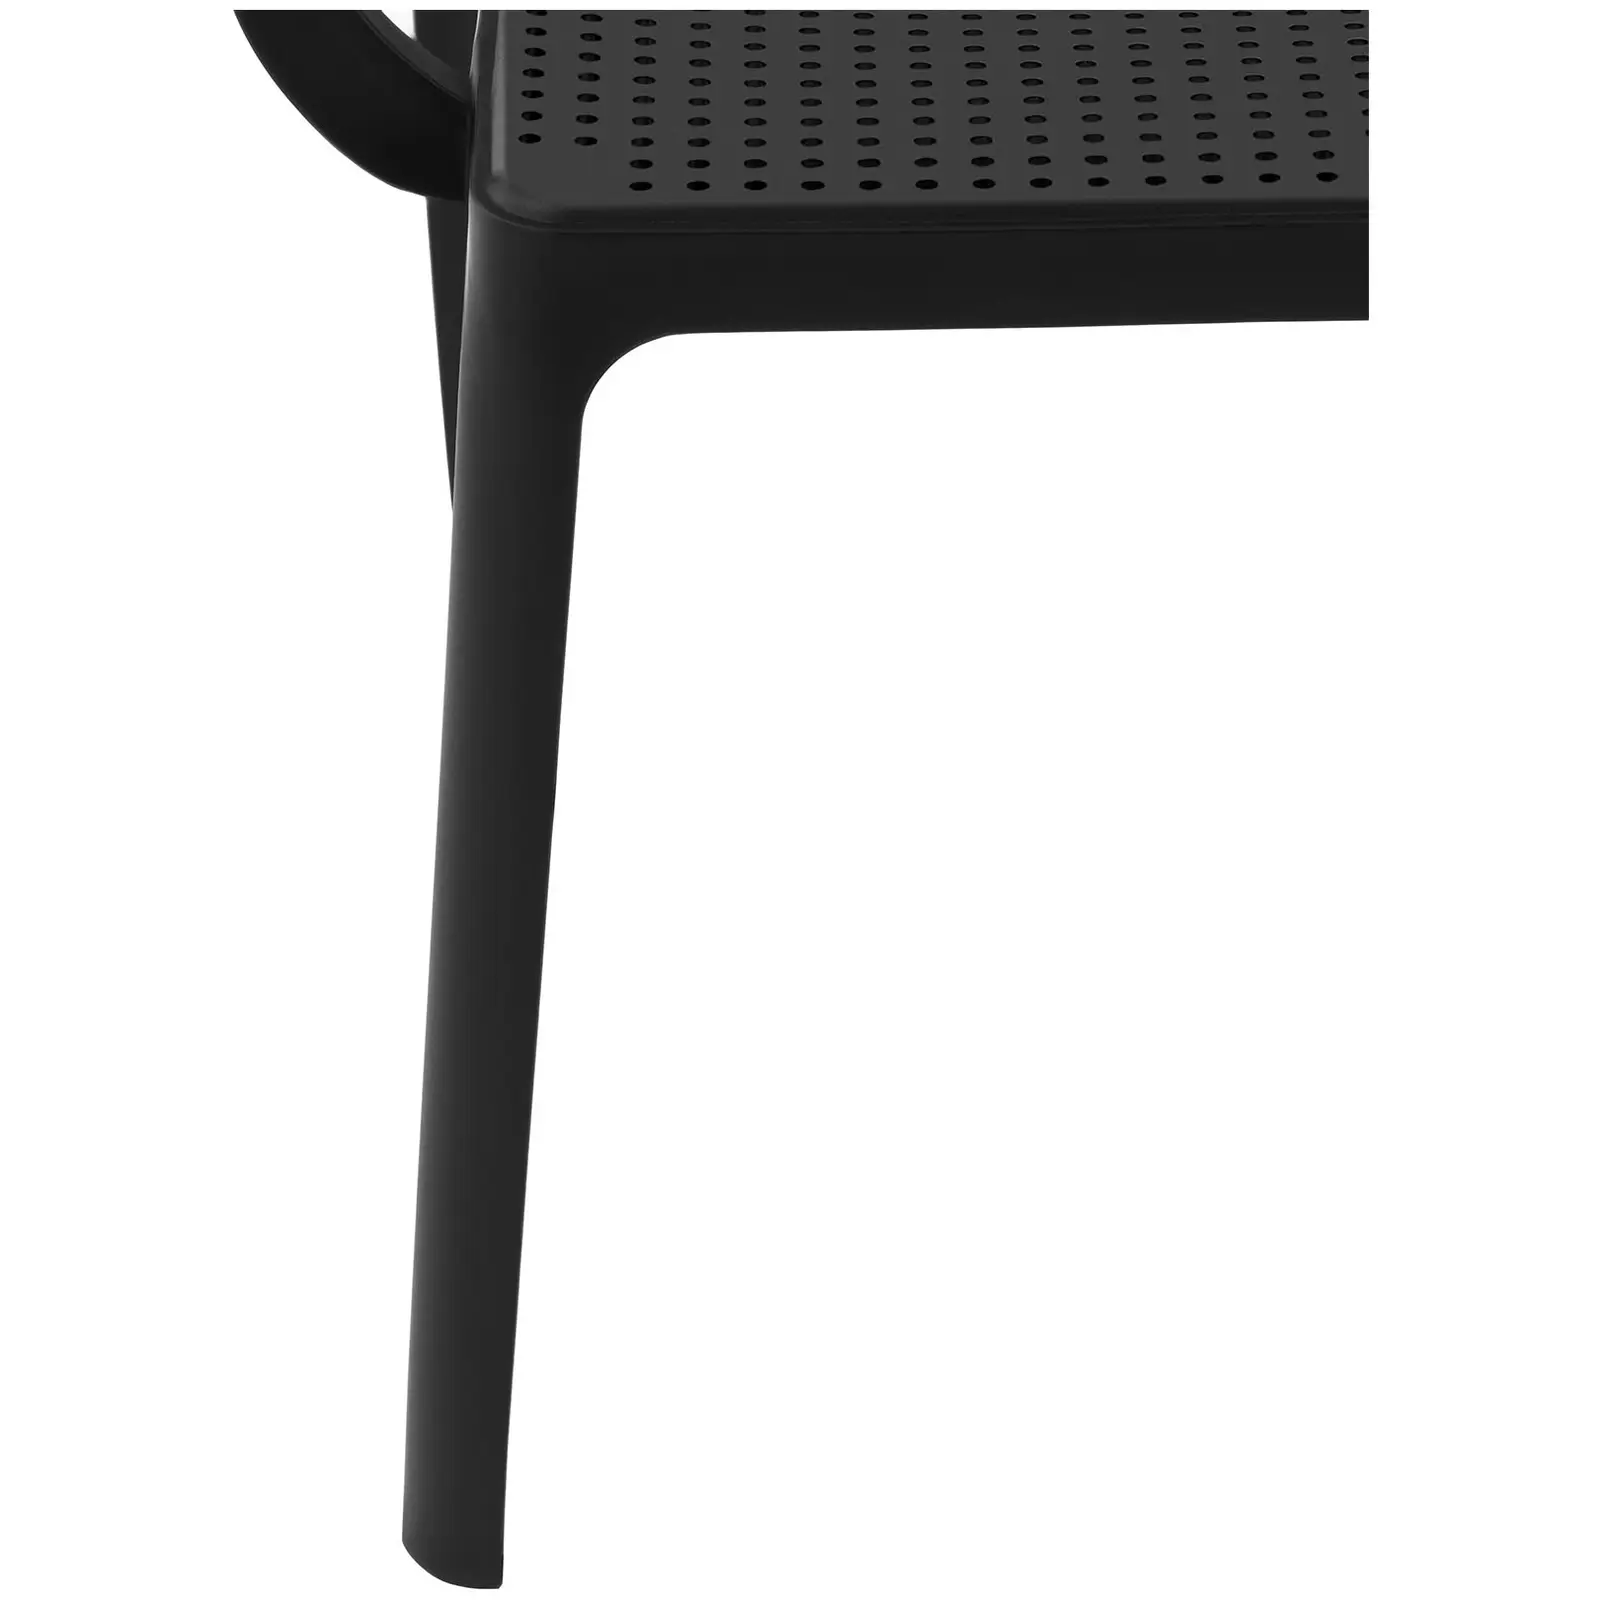 Stolička - súprava 4 ks - do 150 kg - opierka chrbta s vetracími otvormi - lakťová opierka - čierna